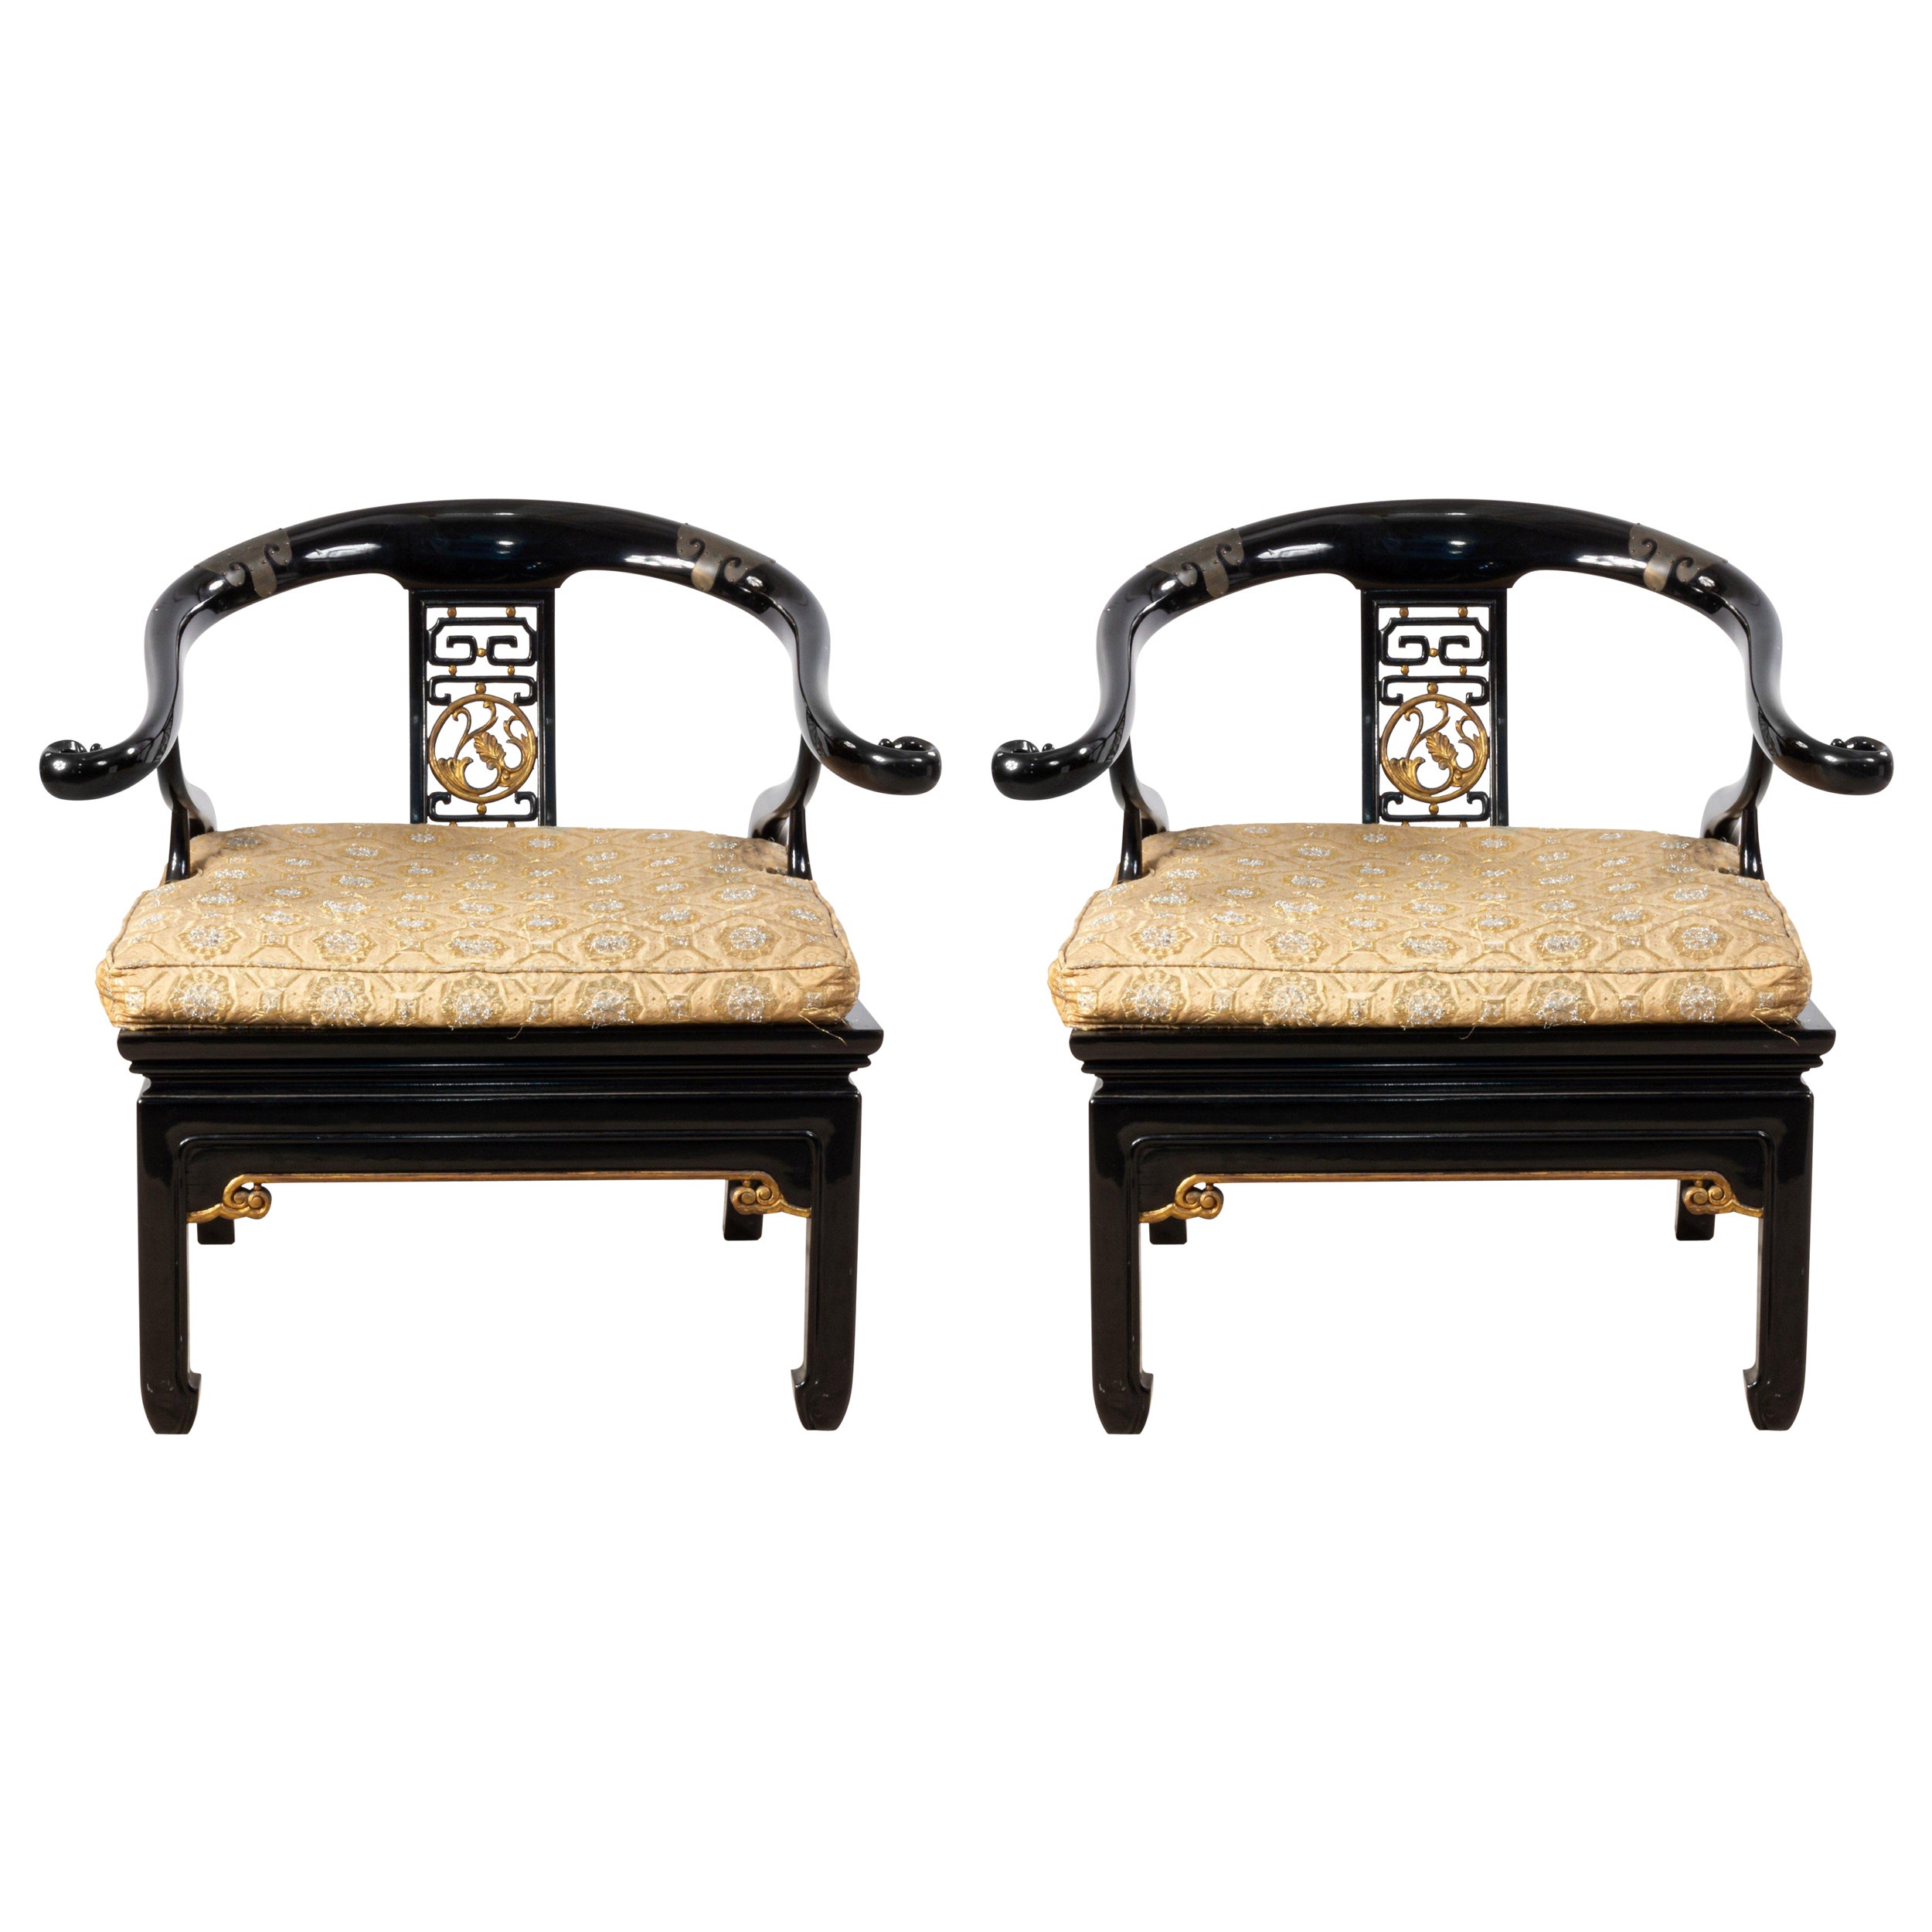 Pair of Mid-Century Ebonized Regency Style Lounge Chairs